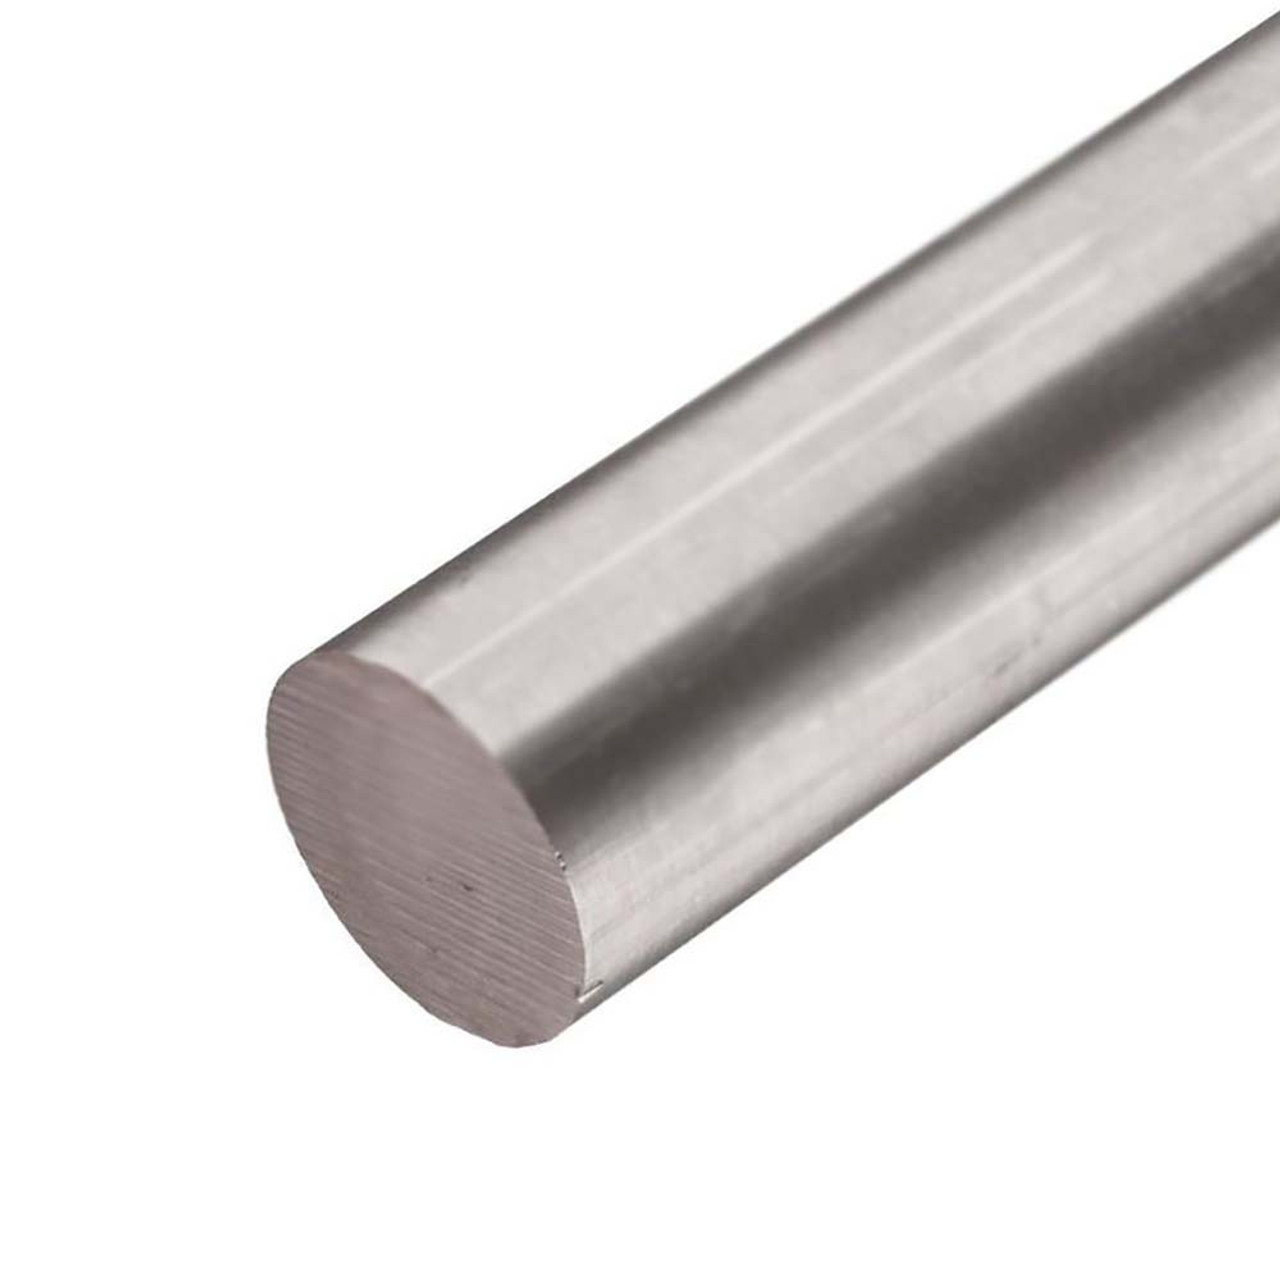 8.500 (8-1/2 inch) x 3 inches, 6061-T6511 Aluminum Round Rod